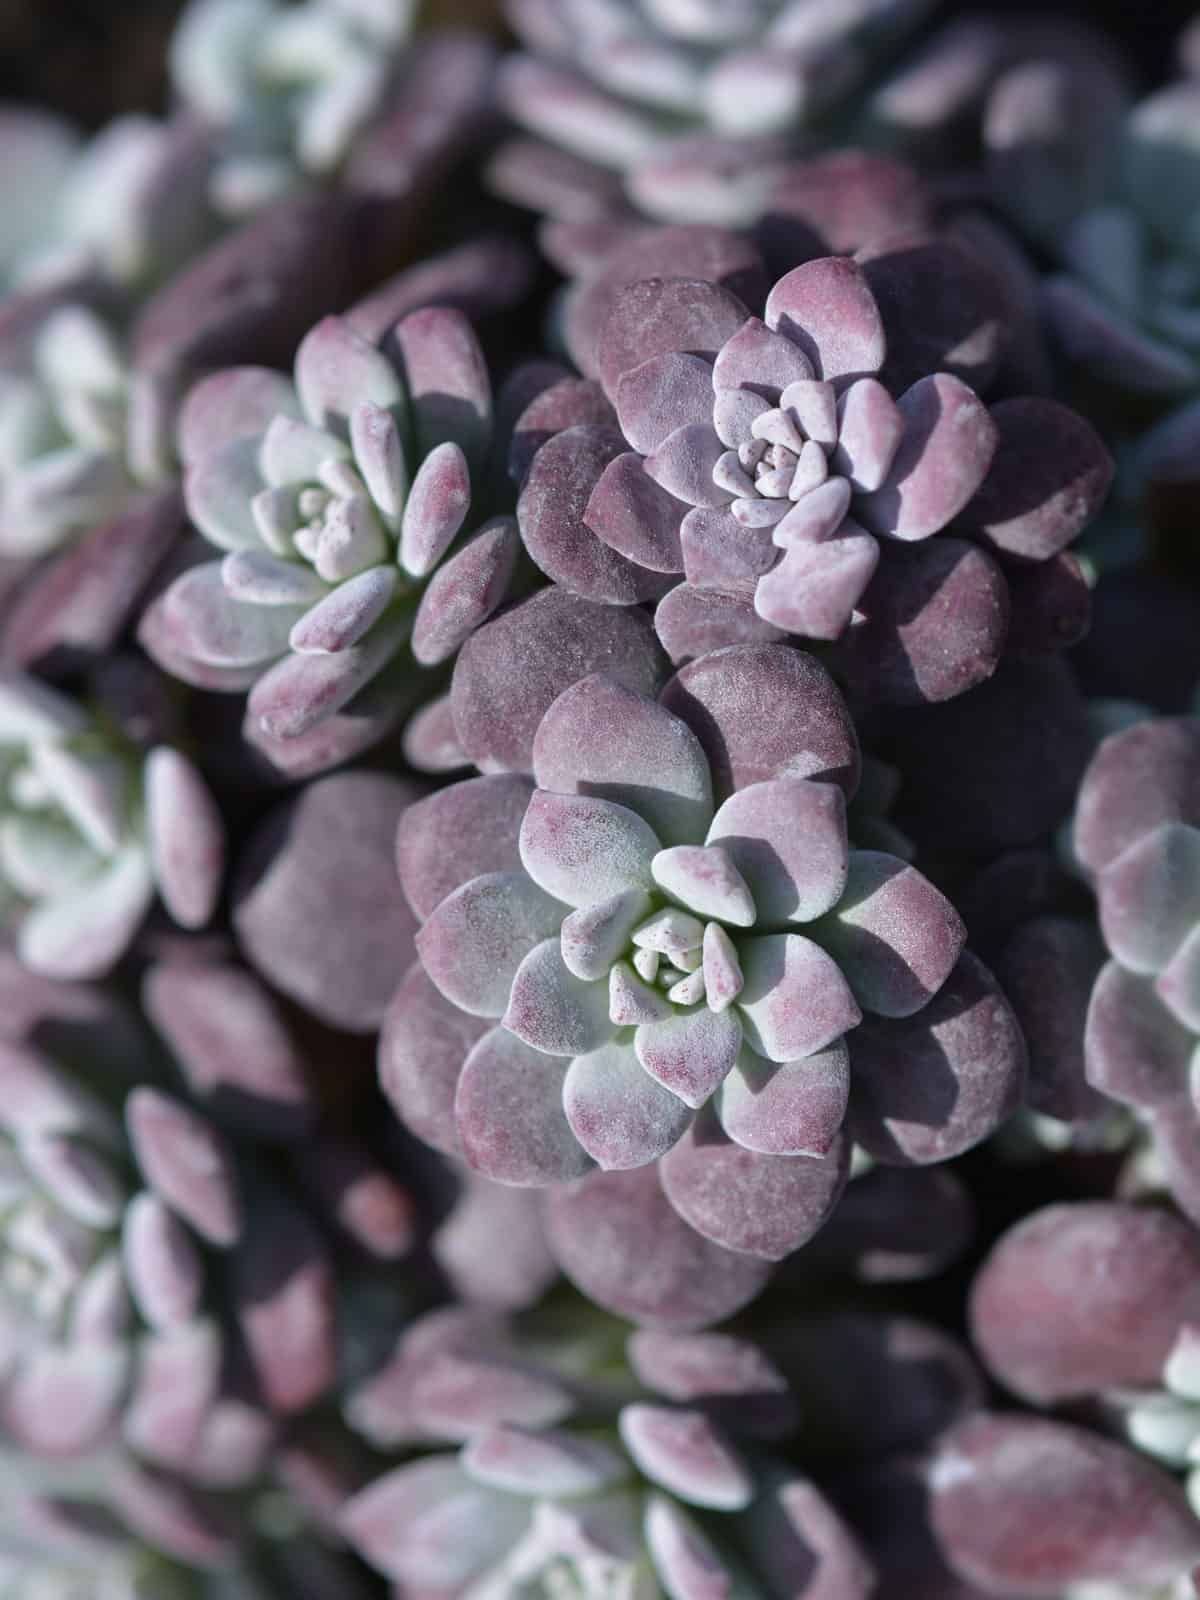 Dark purple leaves with a charcoal texture Sedum Spathulifolium ‘Purpureum’ 